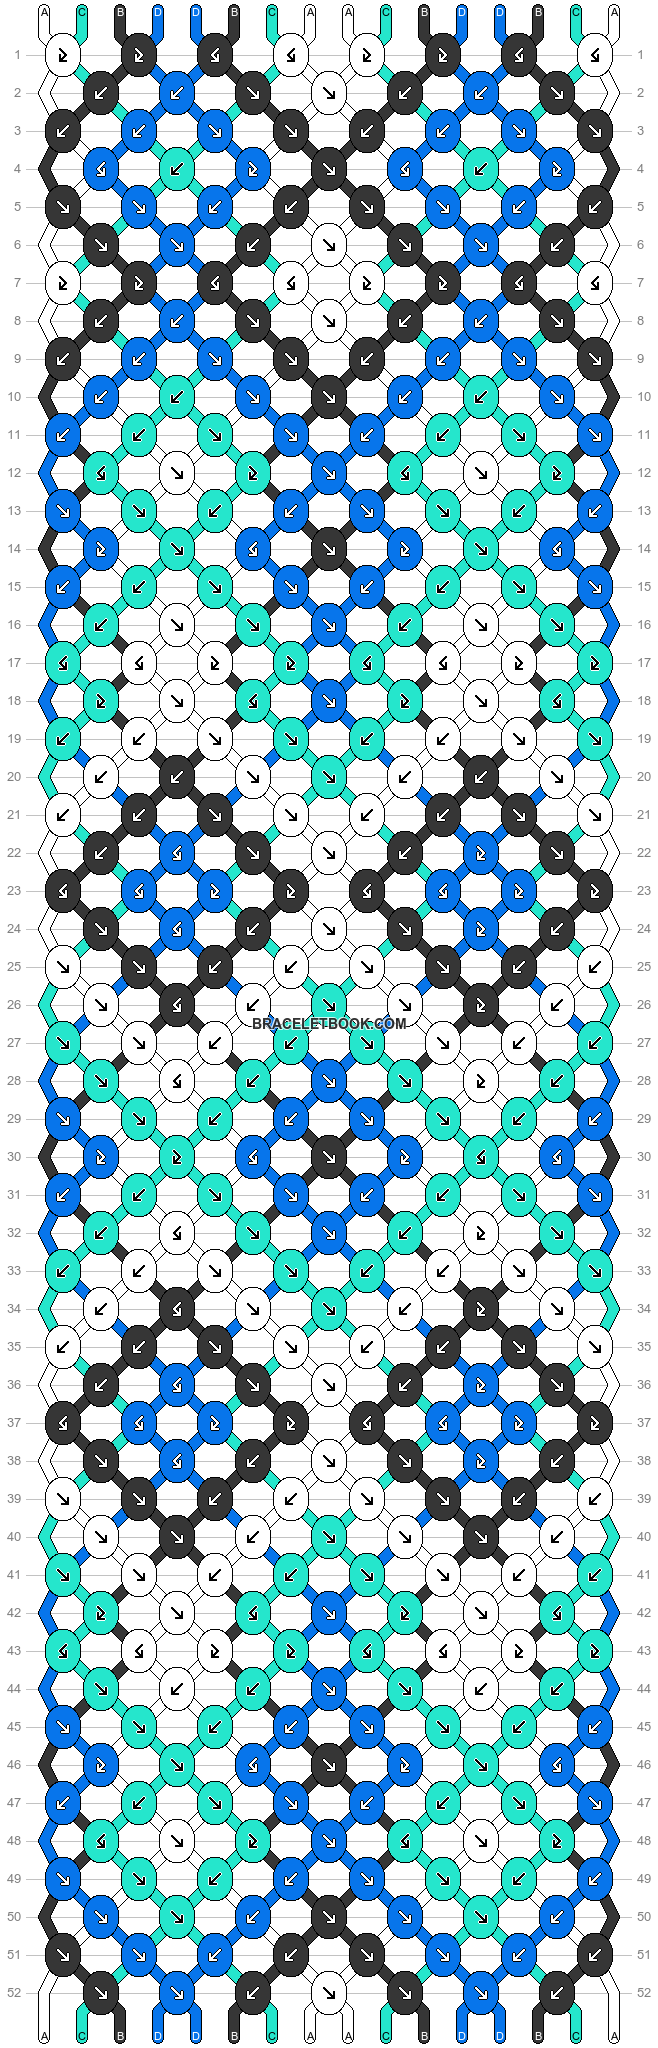 Normal pattern #29485 pattern